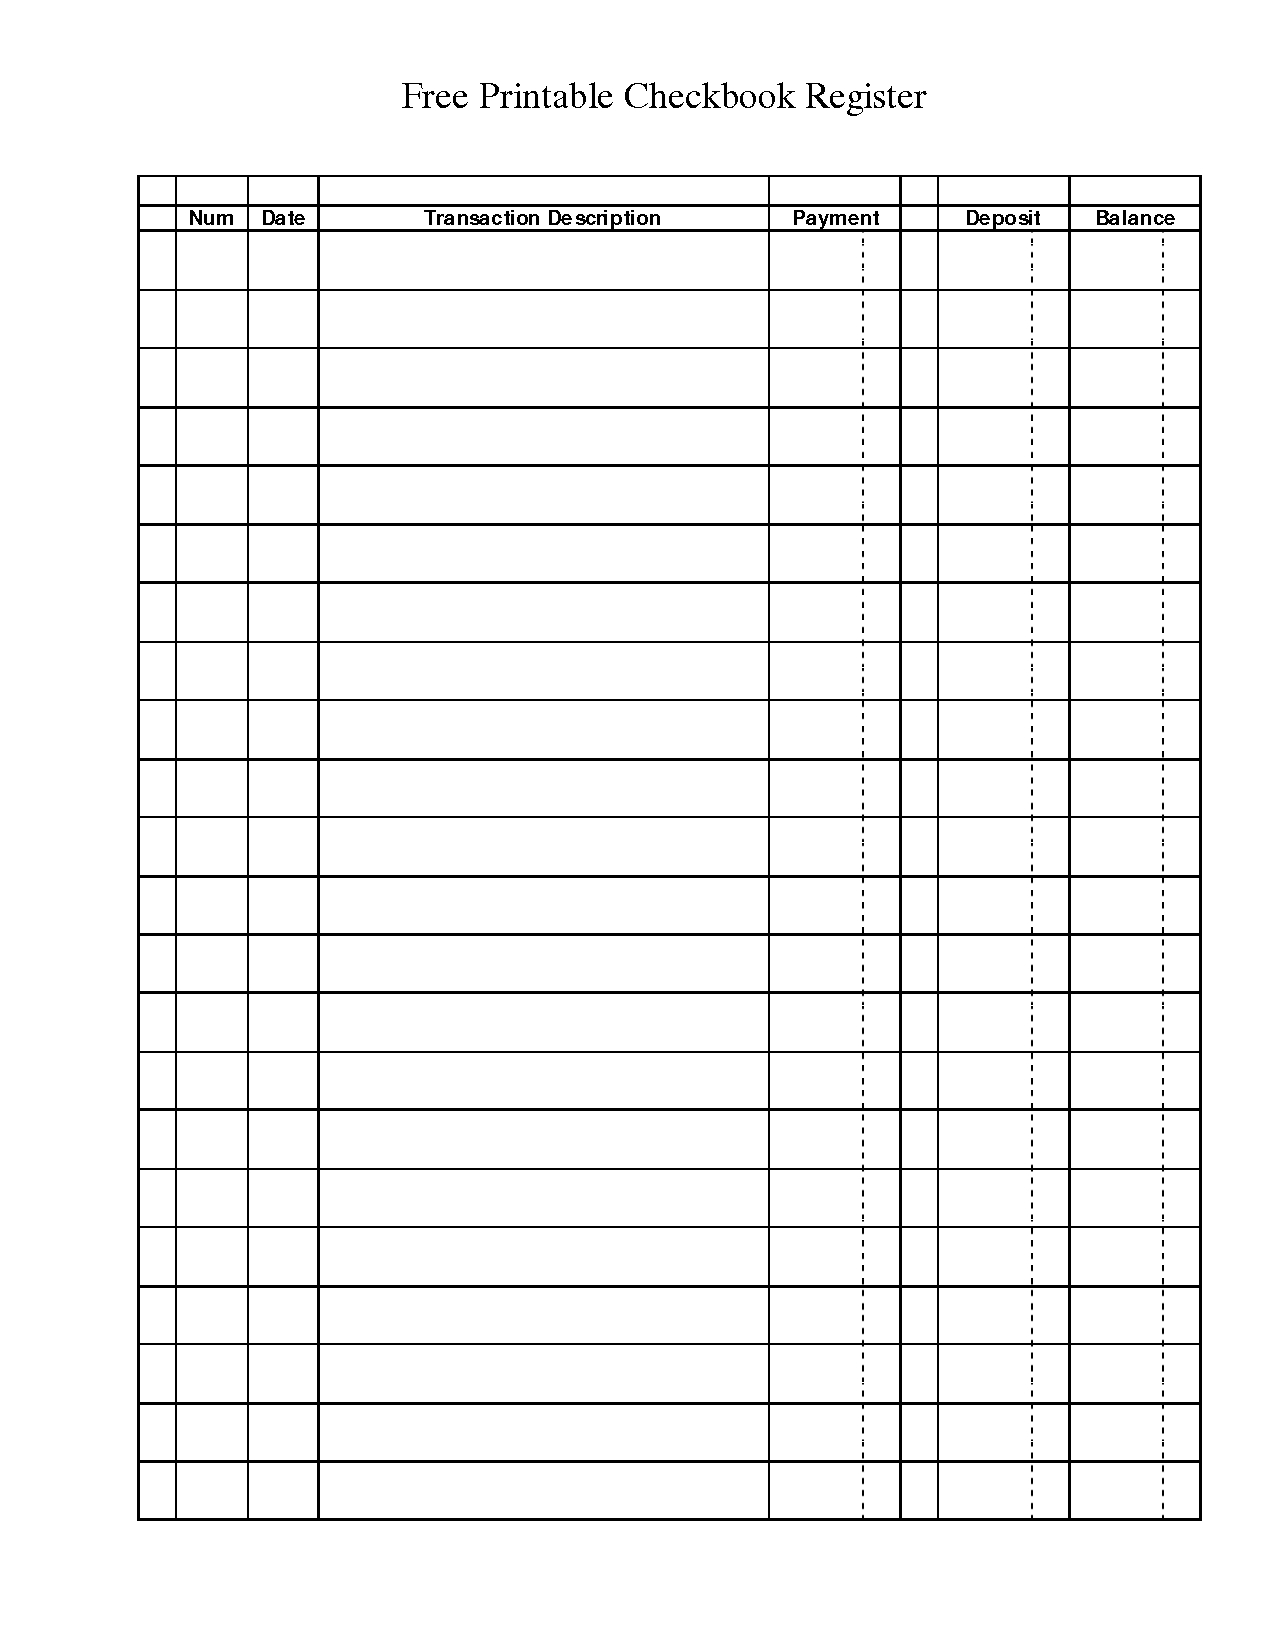 Free Printable Template Chores | Free Printable Check Register - Free Printable Check Register